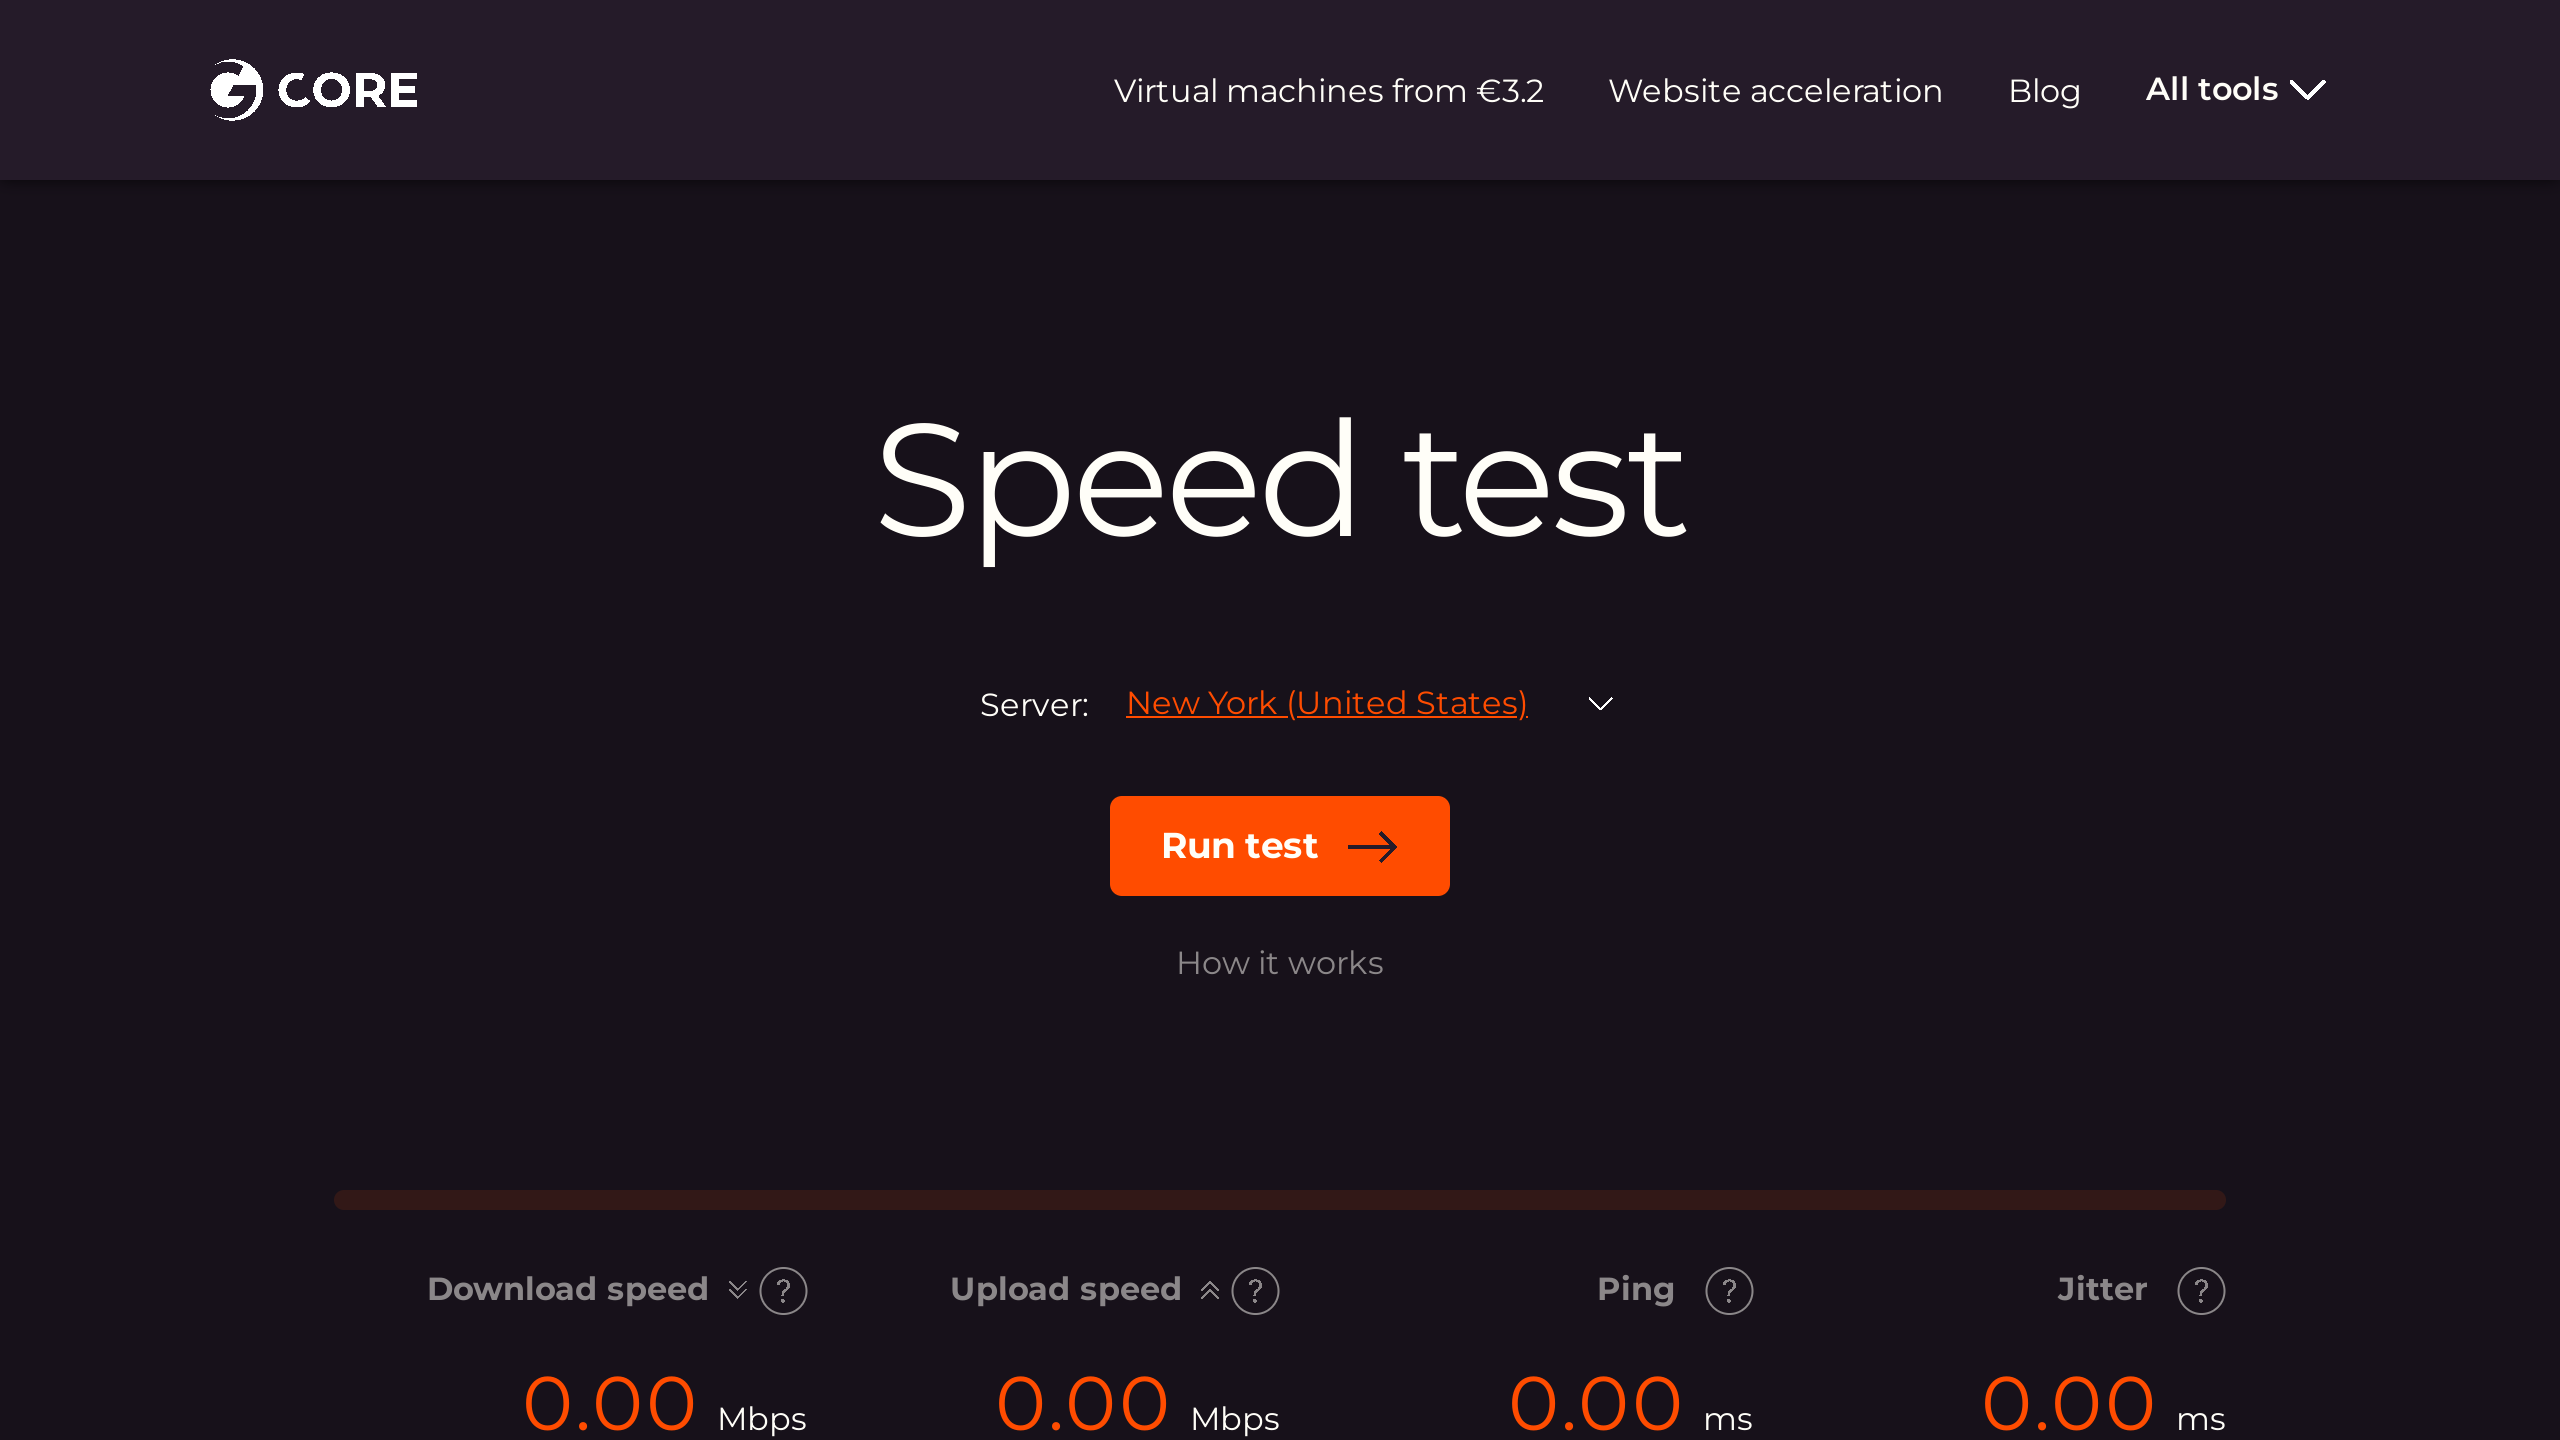 Gcore Speed Test's website screenshot